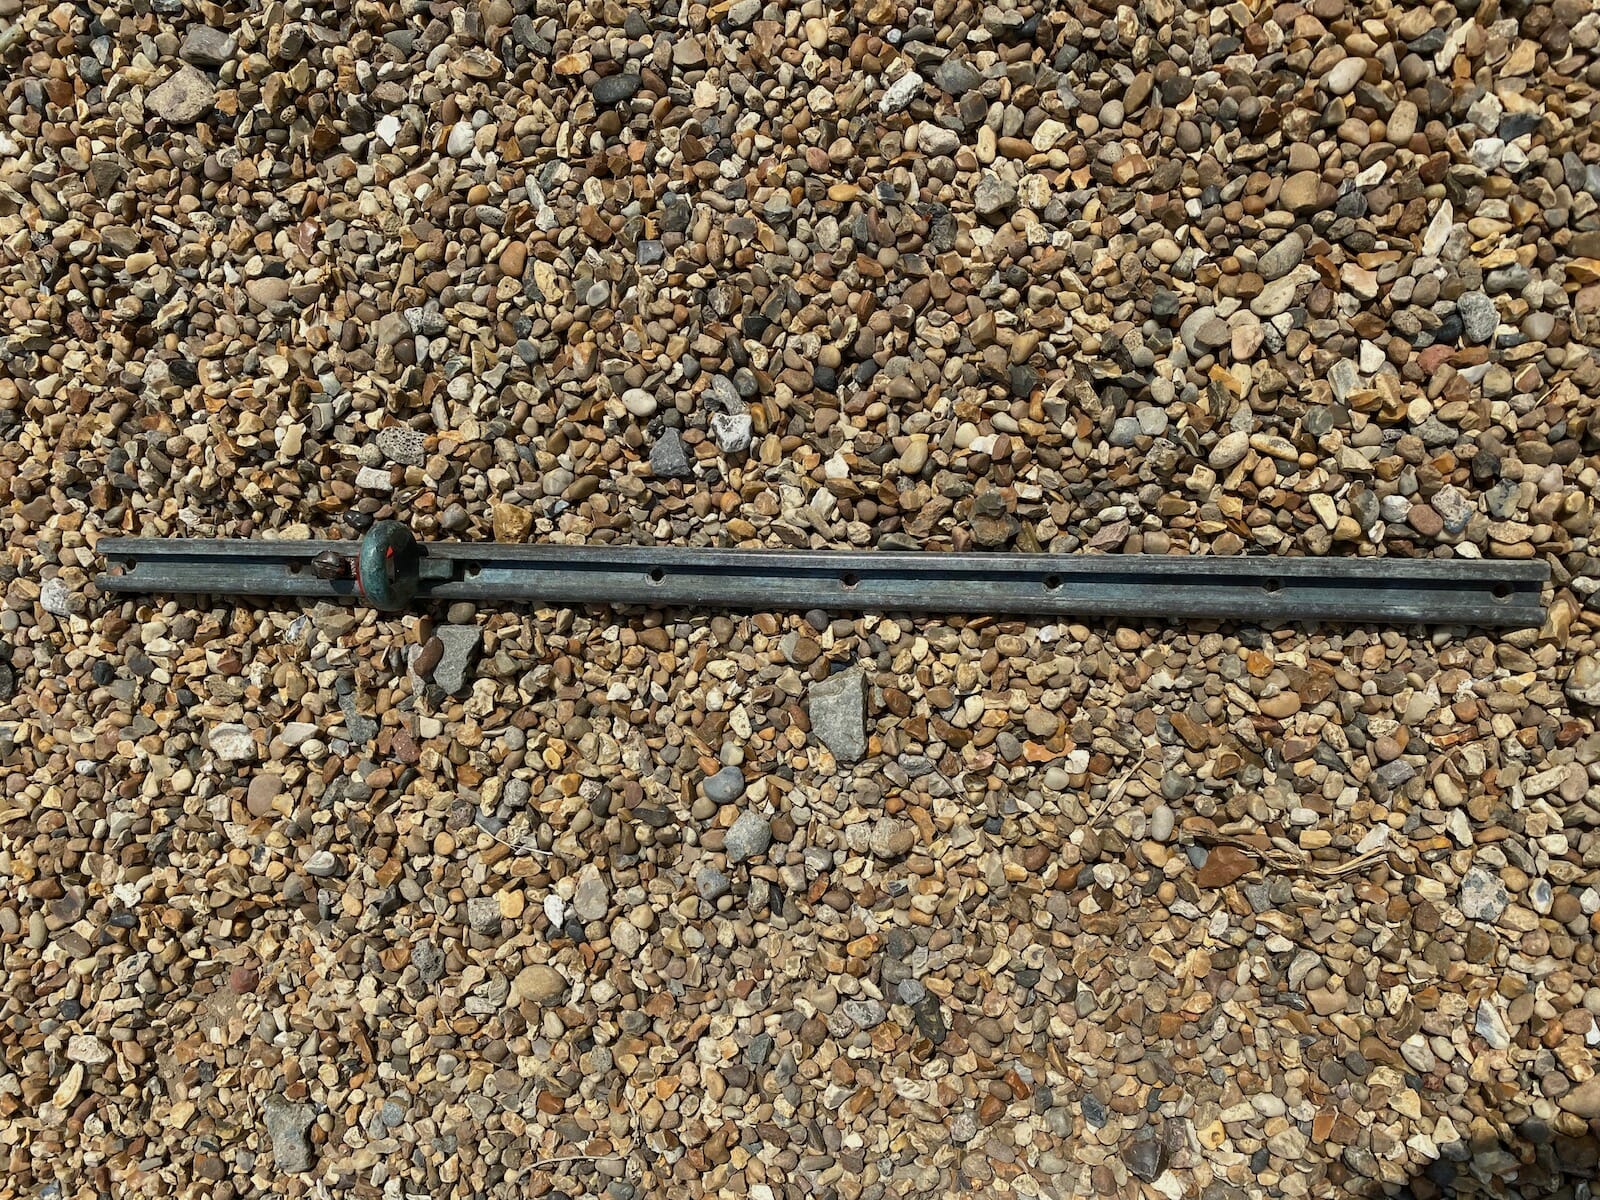 A155-Spinnaker-Pole-mast-fitting.jpeg